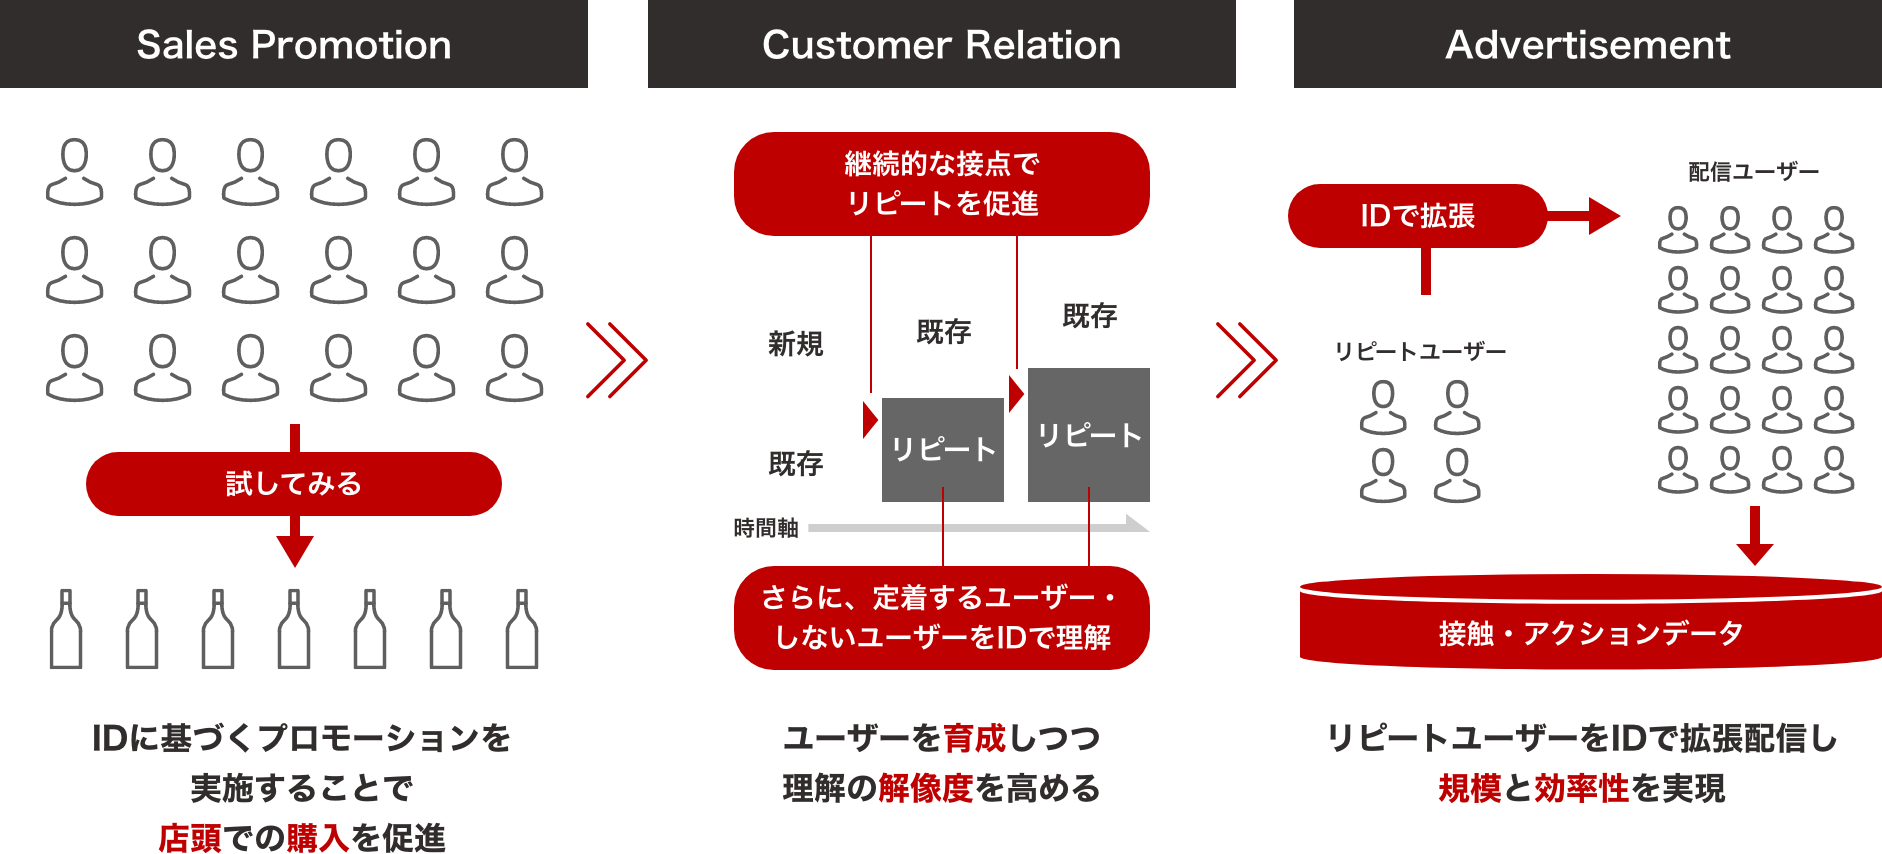 Sales Promotion / Customer Relation / Advertisement